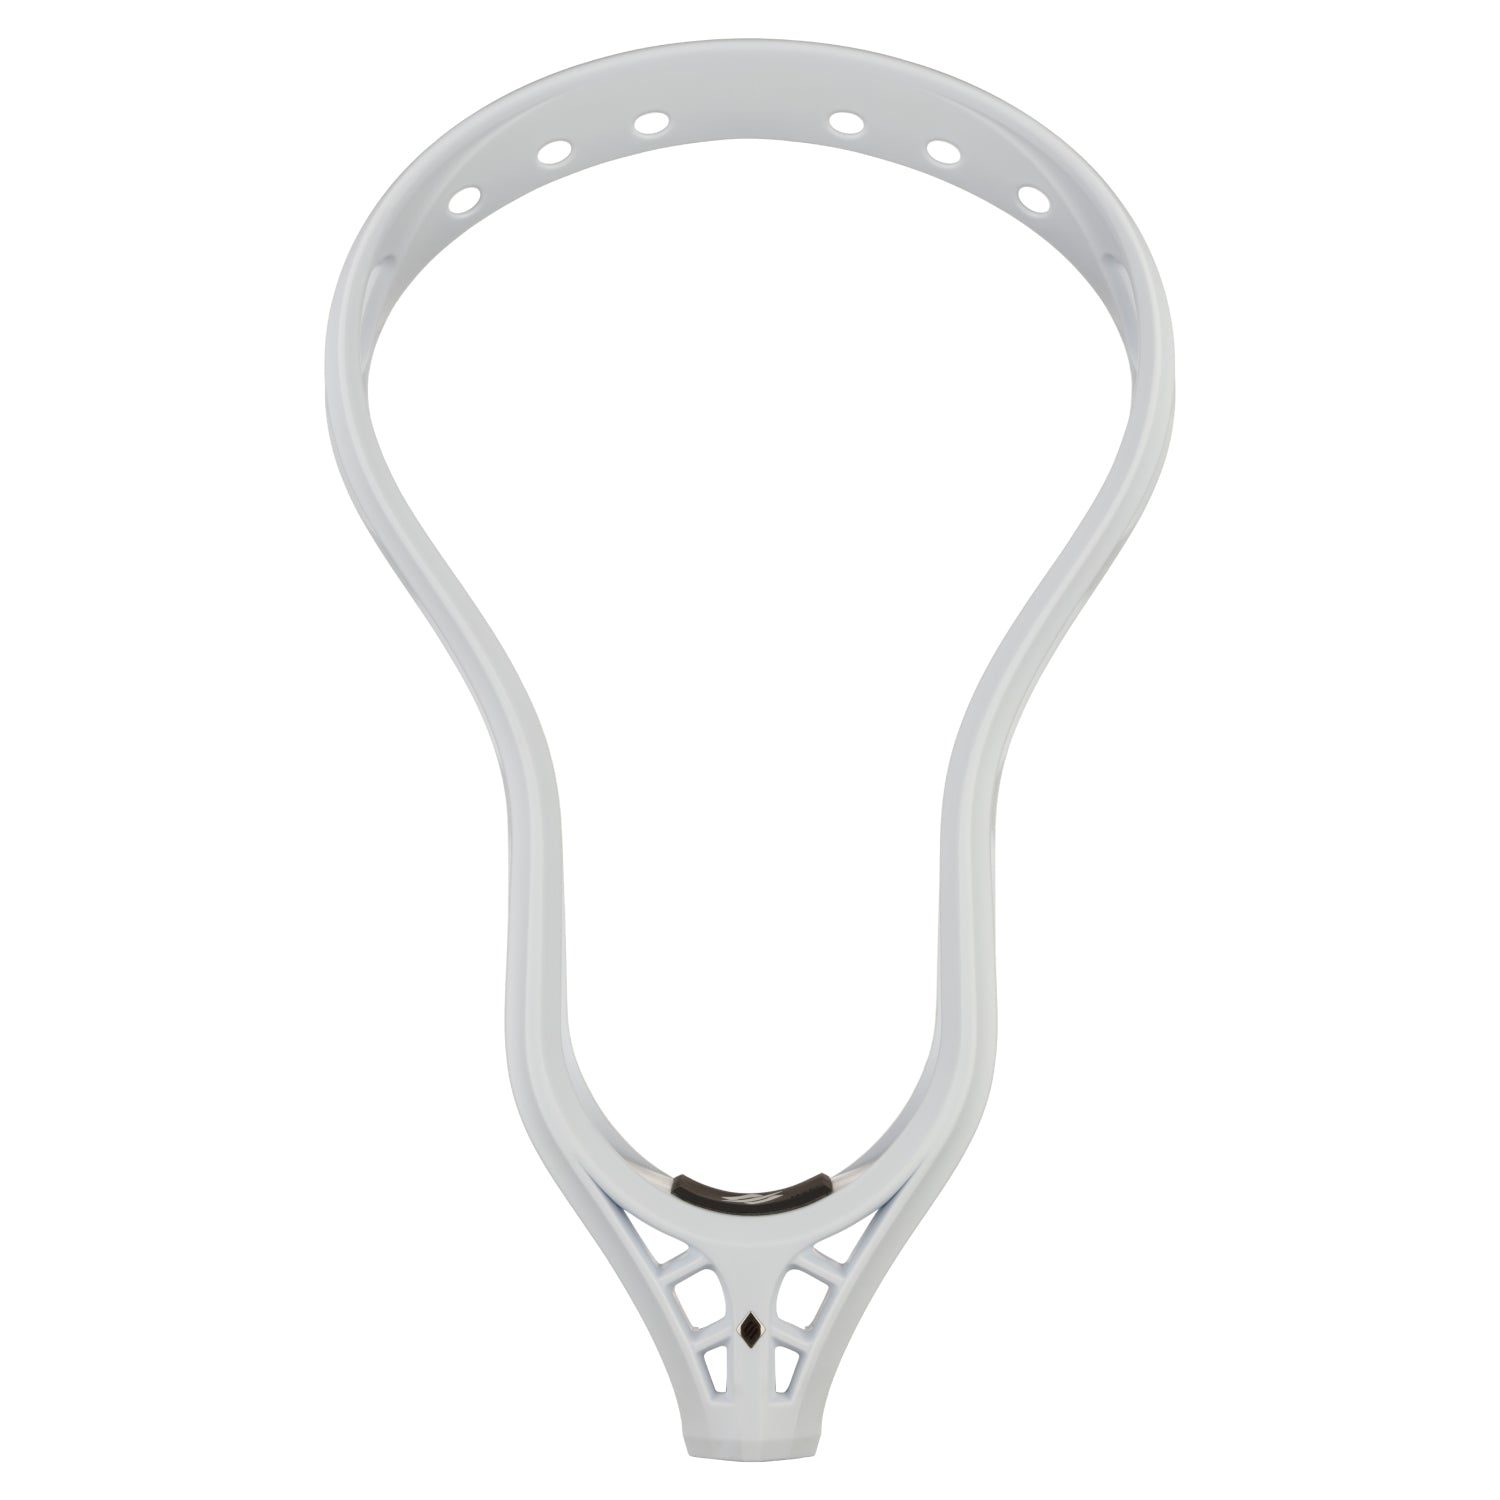 StringKing Mark 2D Unstrung Lacrosse Head